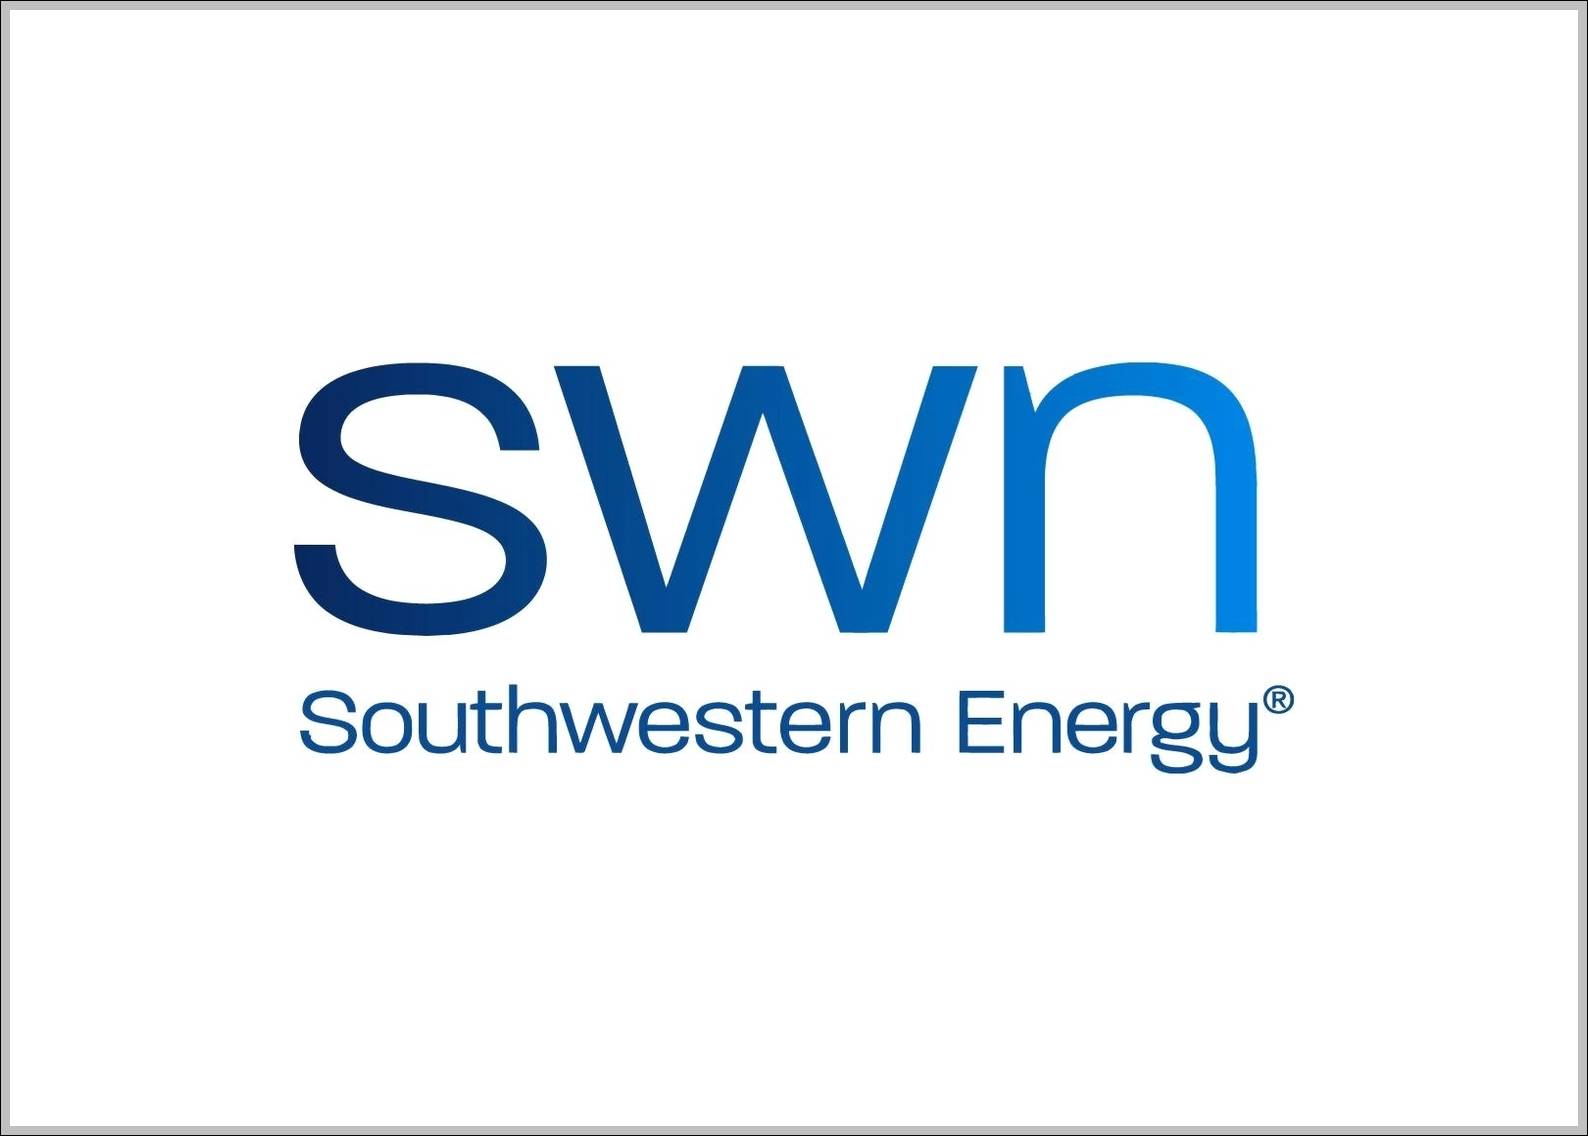 SWN logo